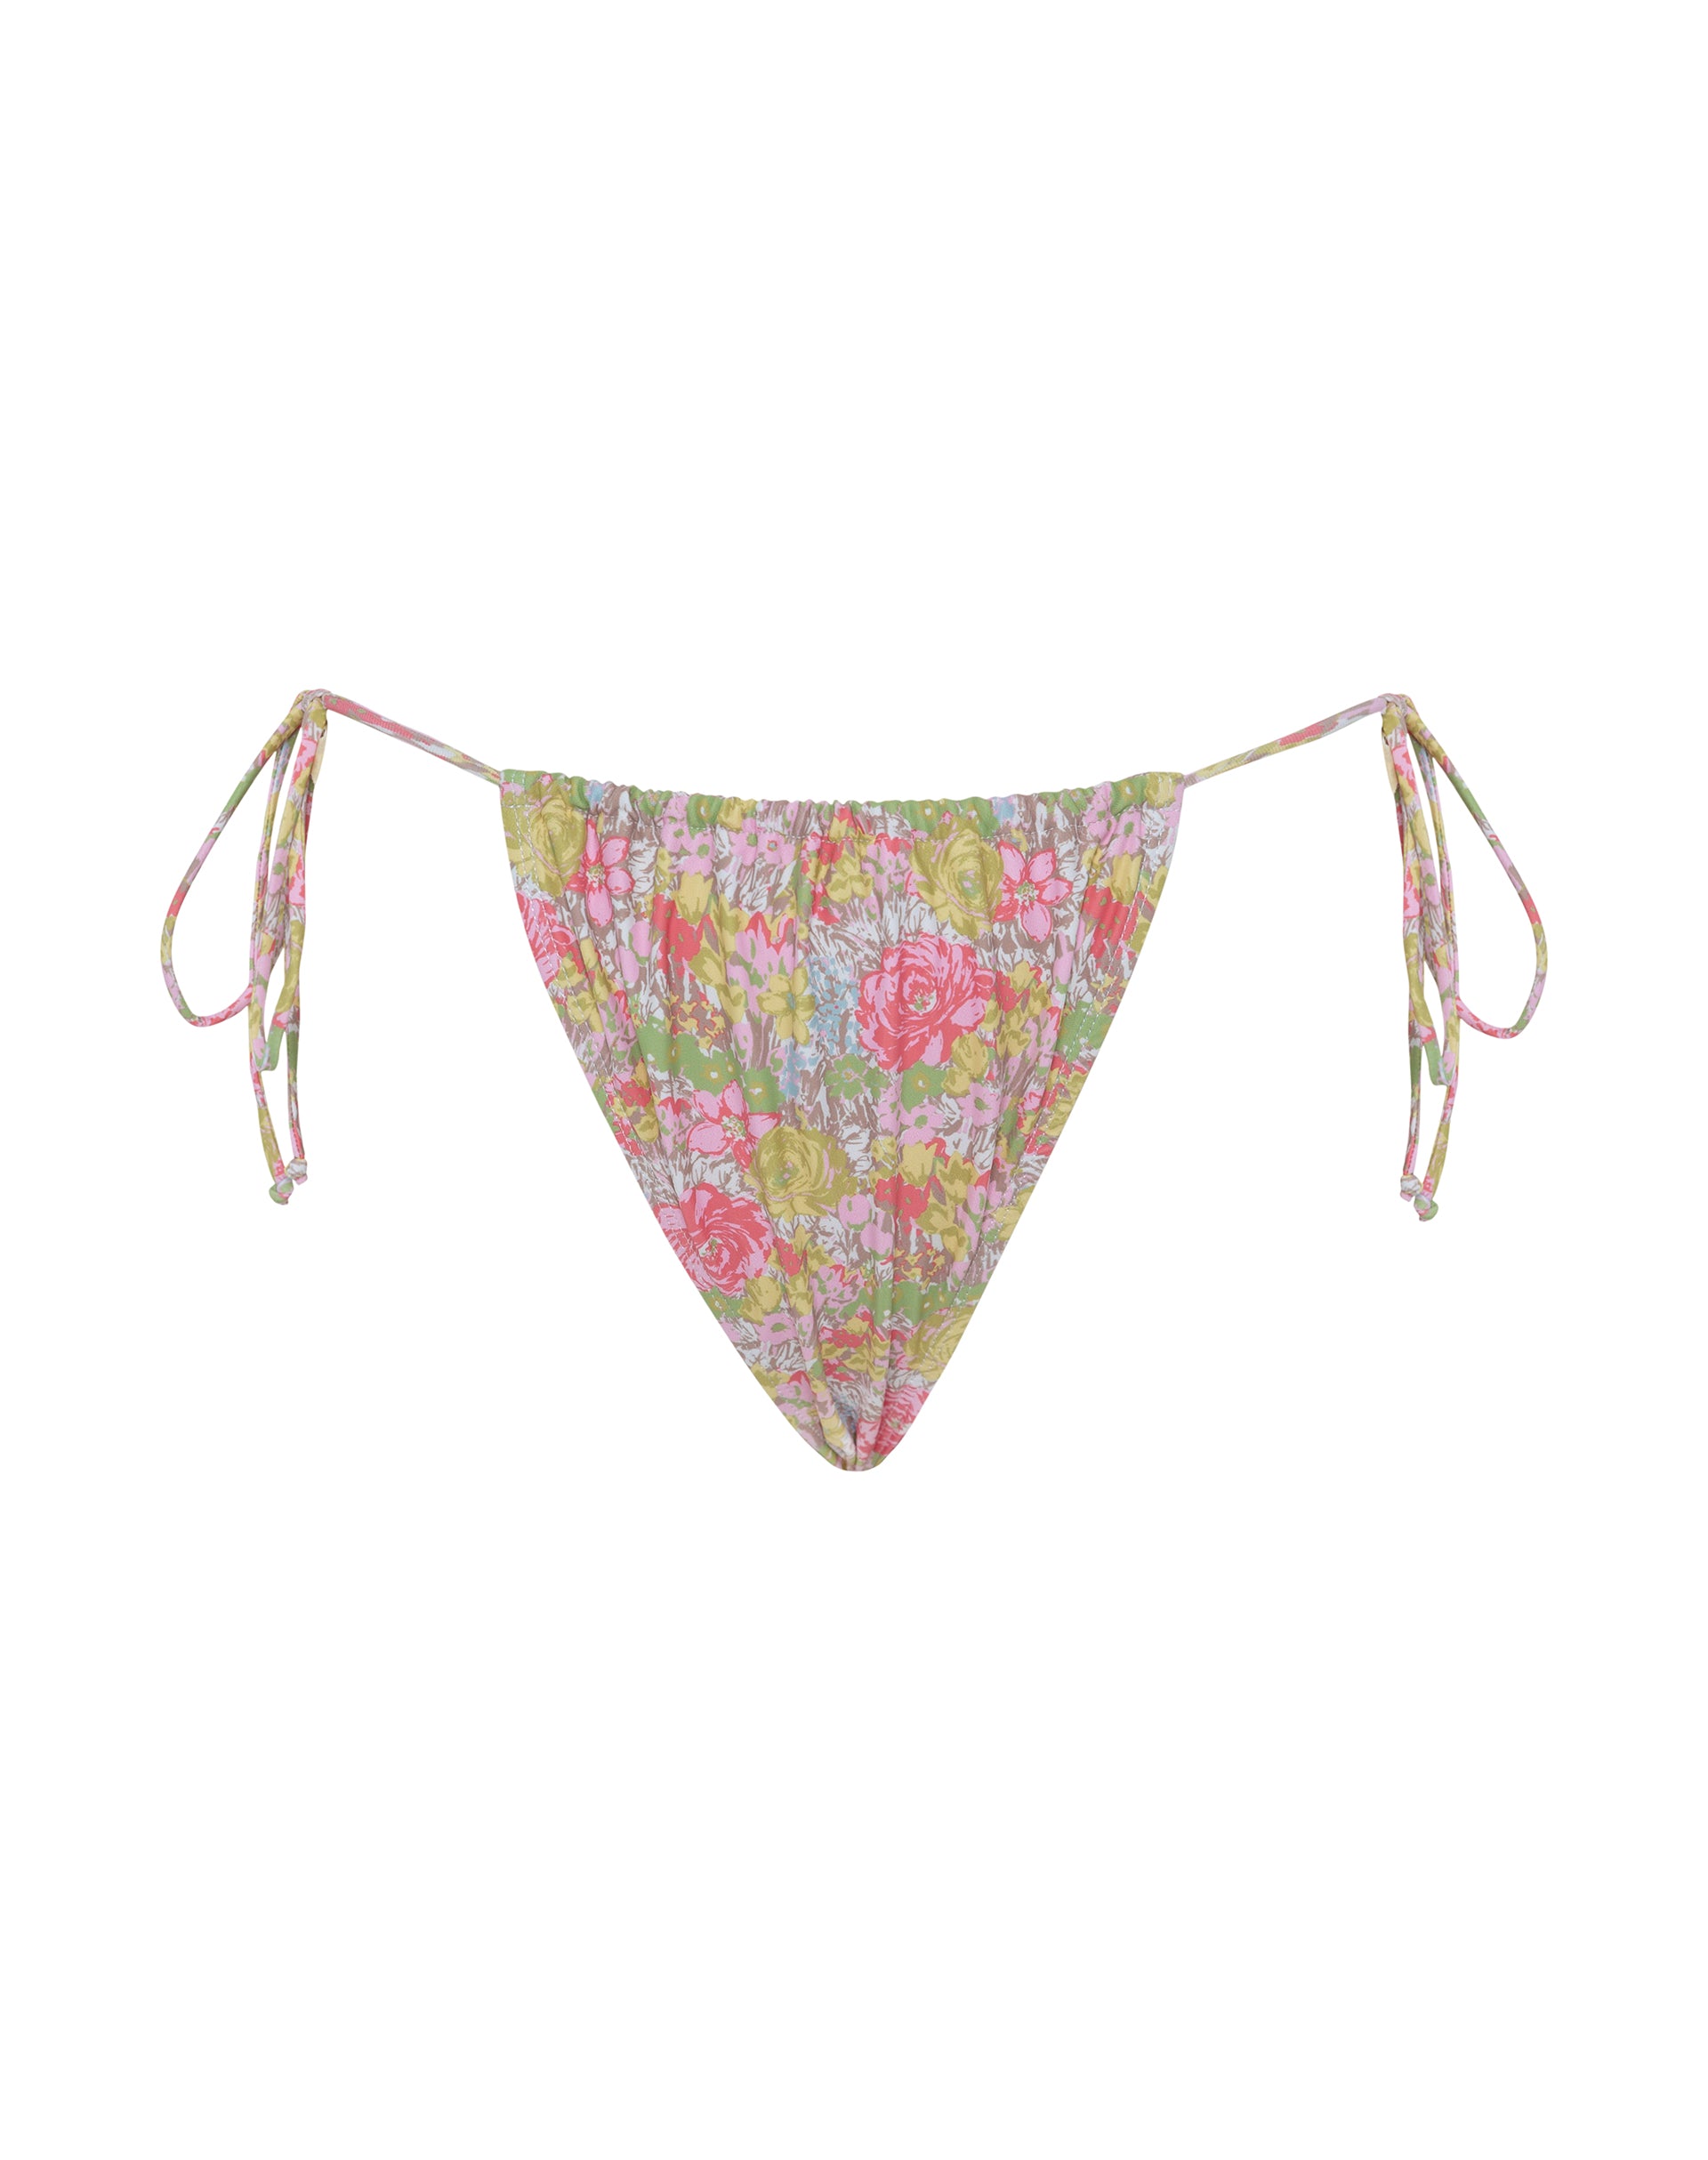 Image of Leyna Bikini Bottom in Pink Abstract Floral Swim